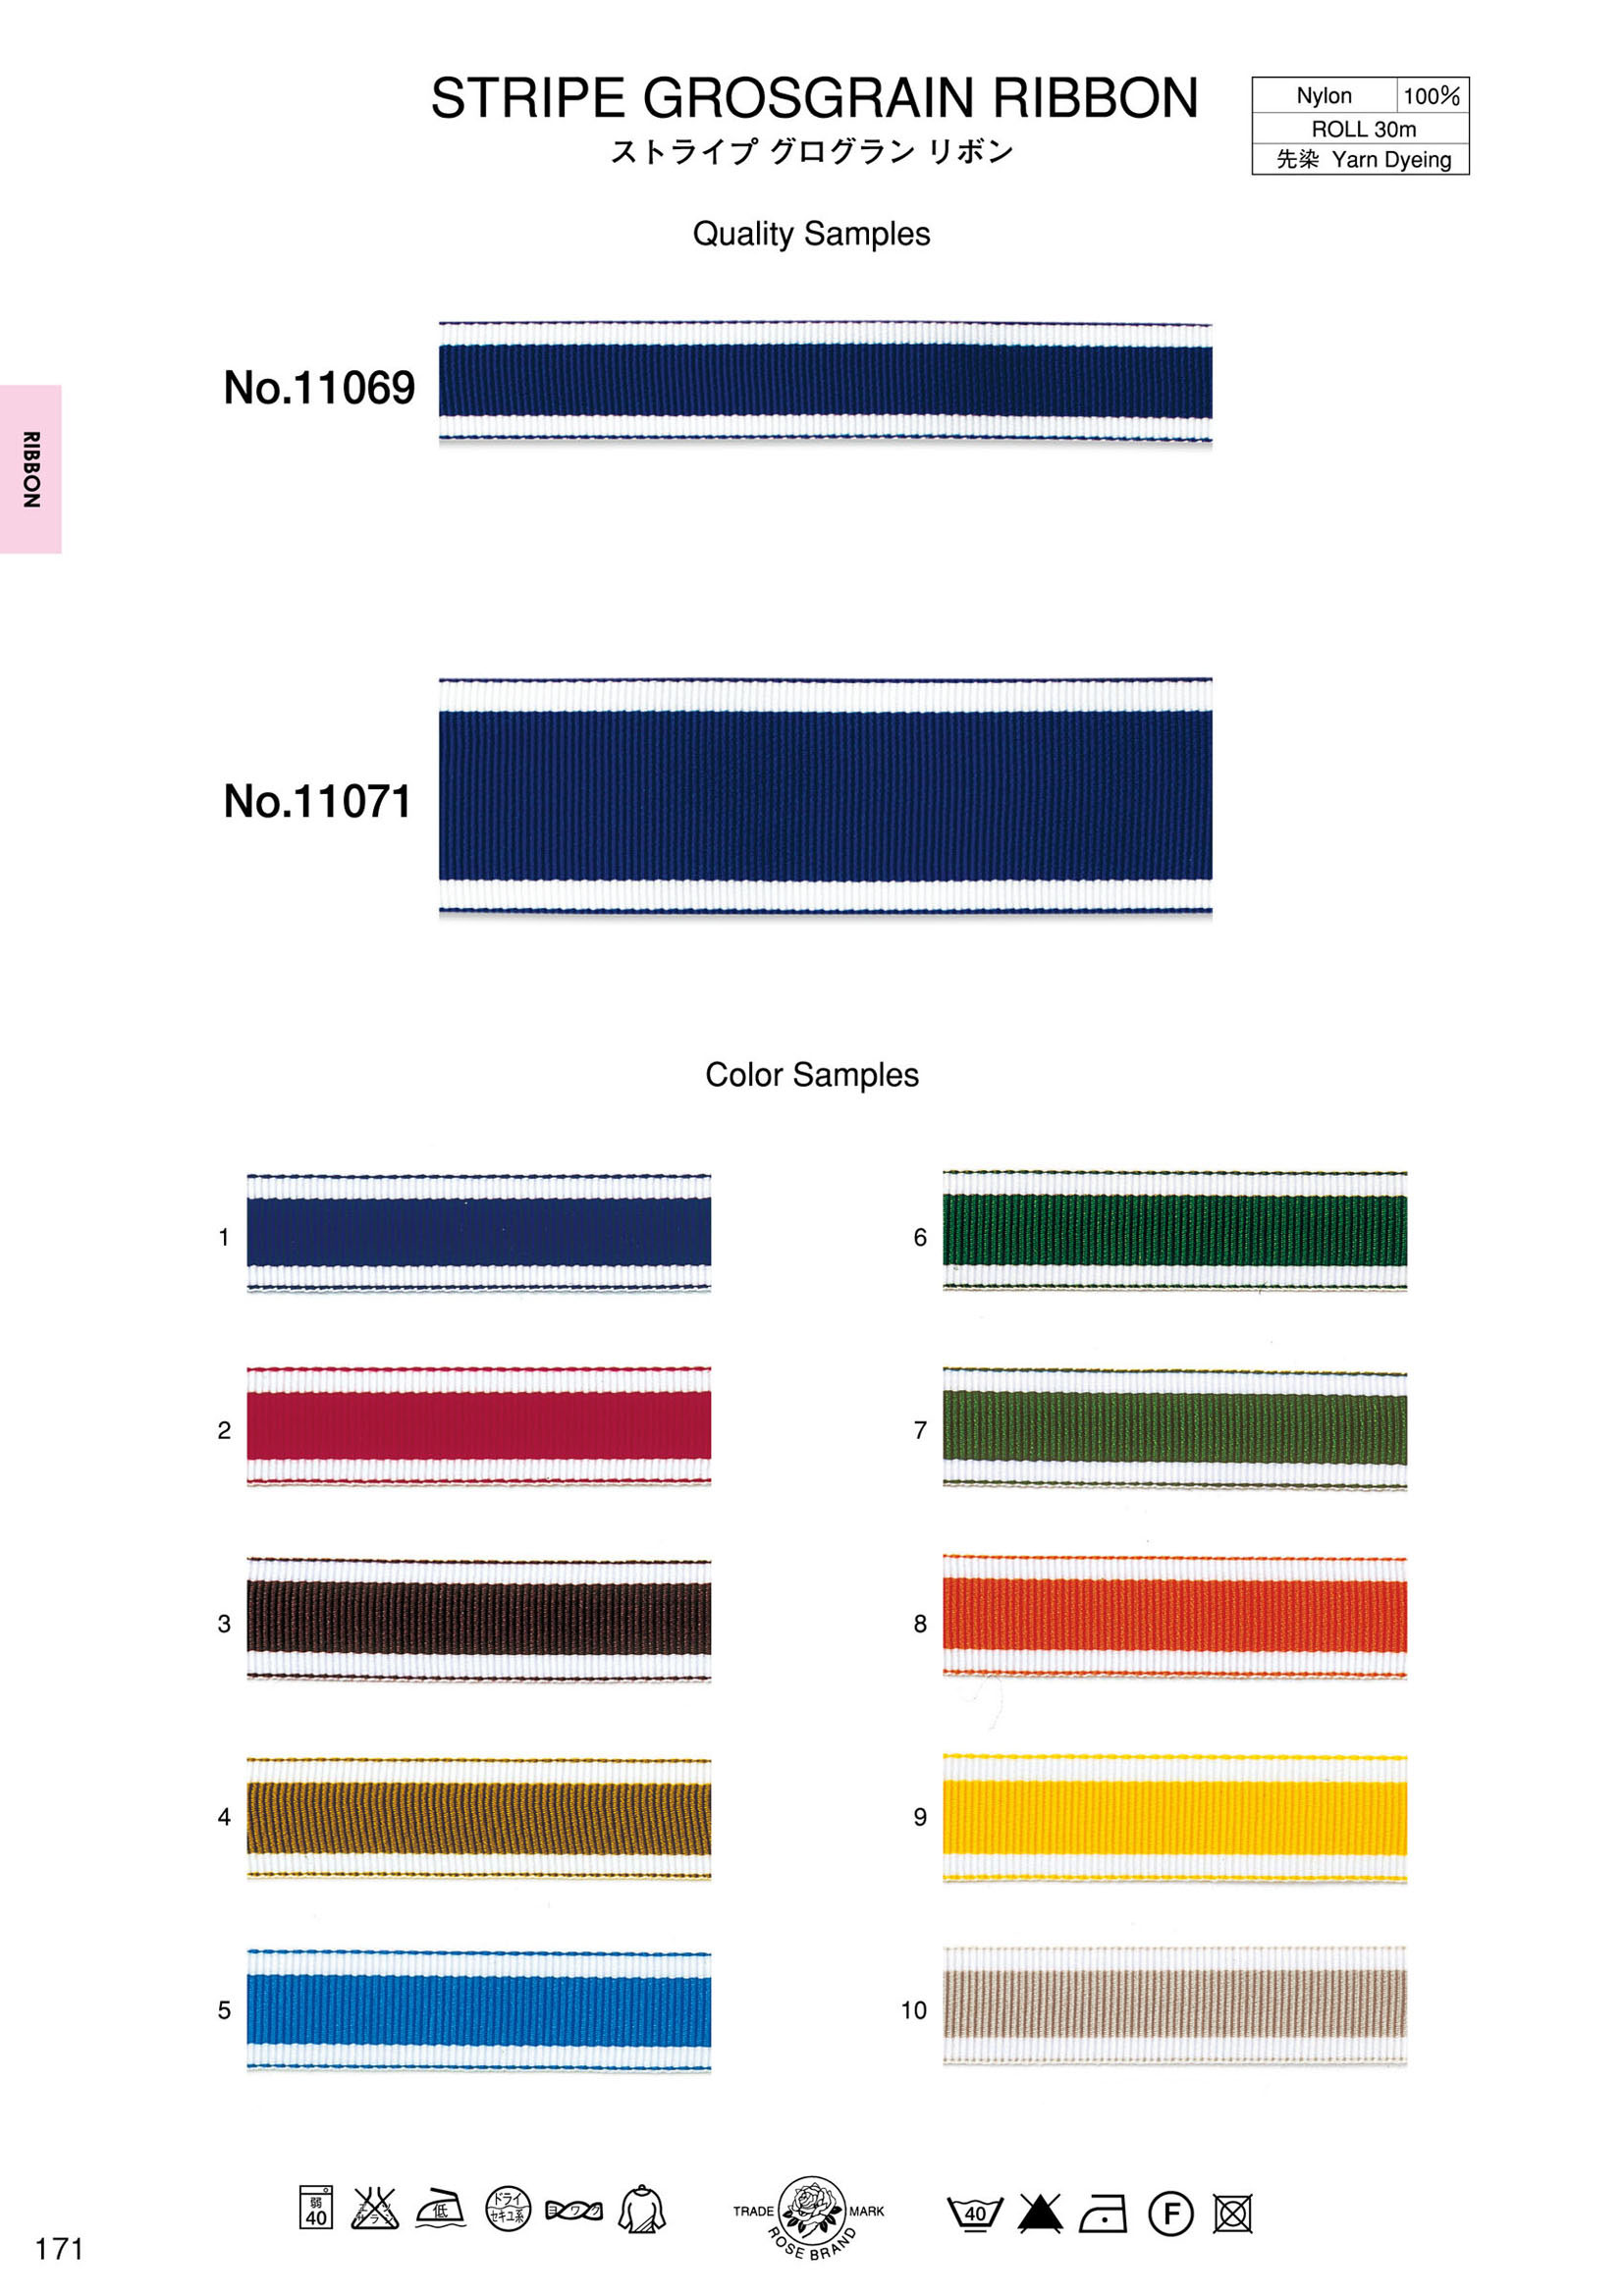 11071 Striped Grosgrain Ribbon[Ribbon Tape Cord] ROSE BRAND (Marushin)